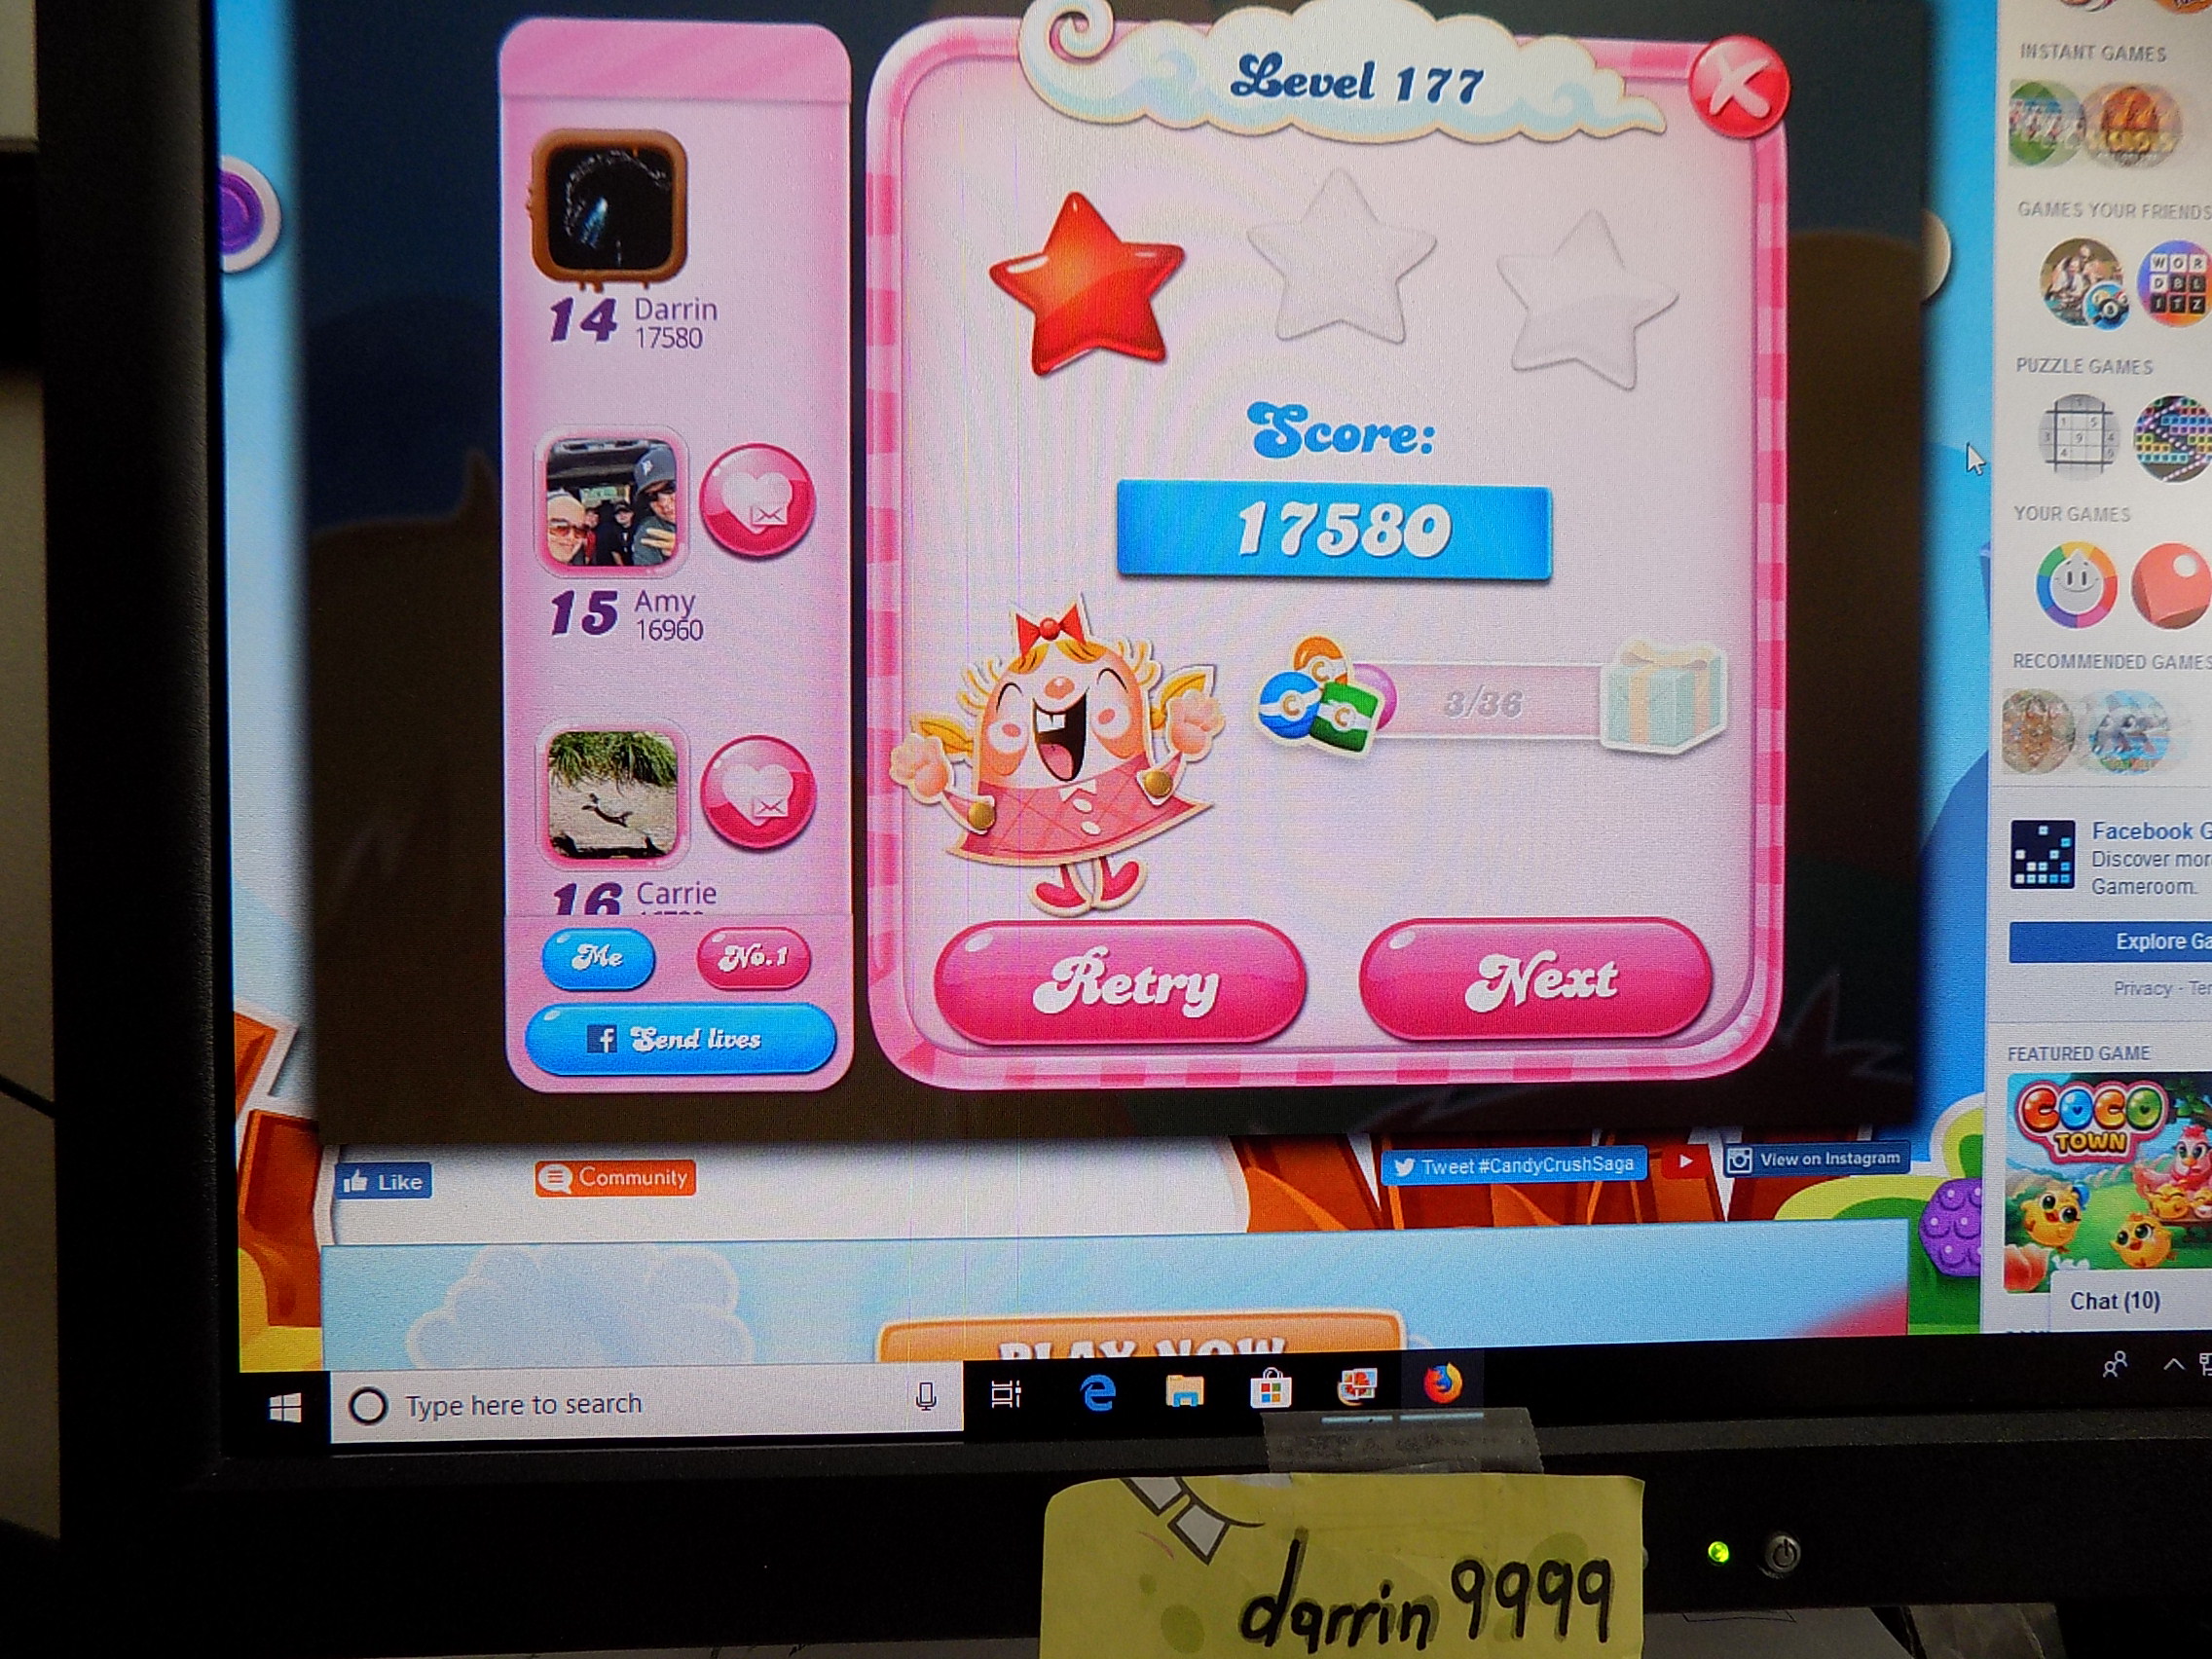 Candy Crush Saga: Level 177 17,580 points